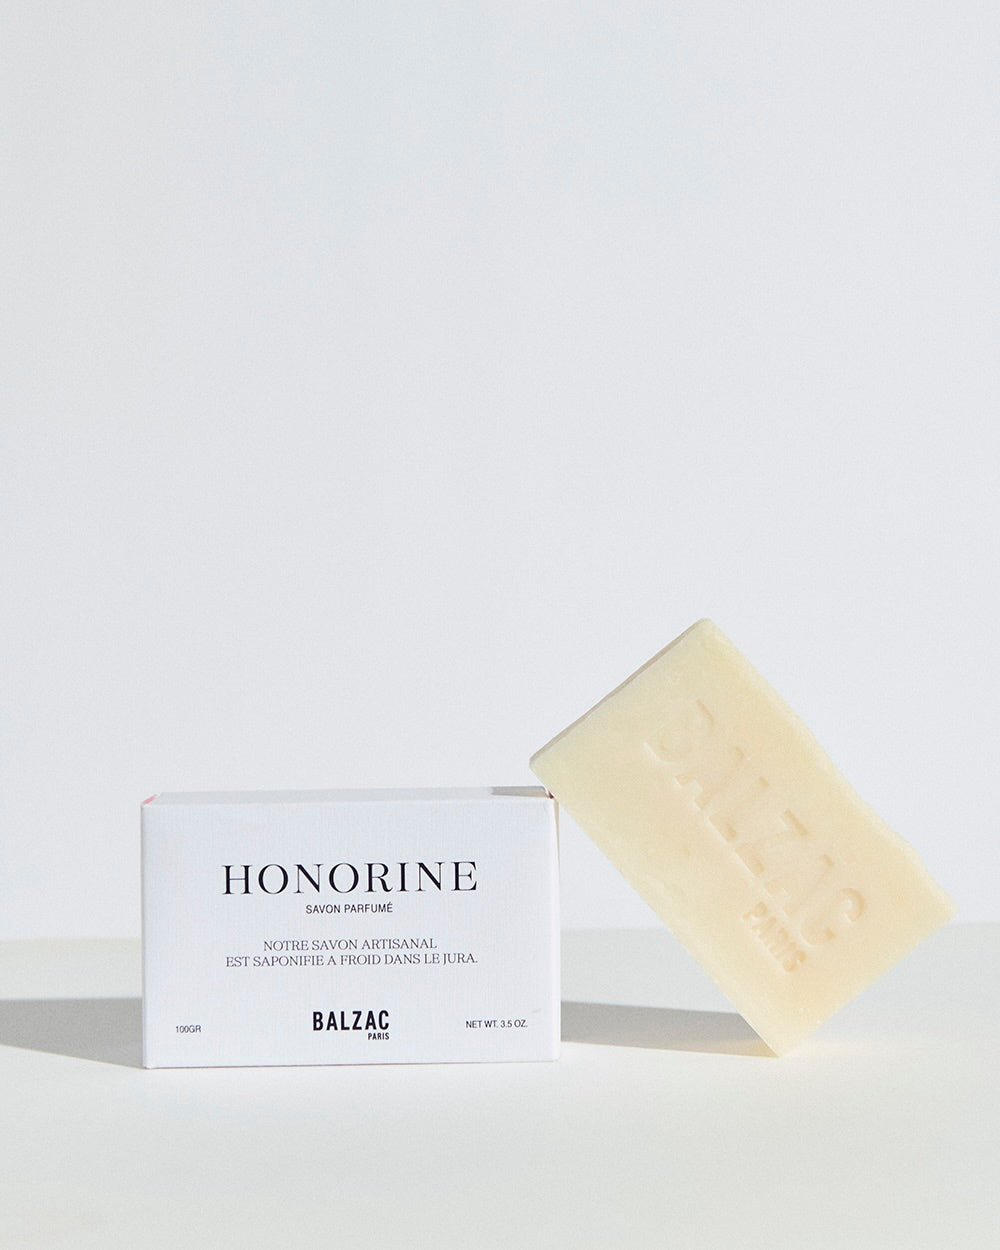 Honorine soap